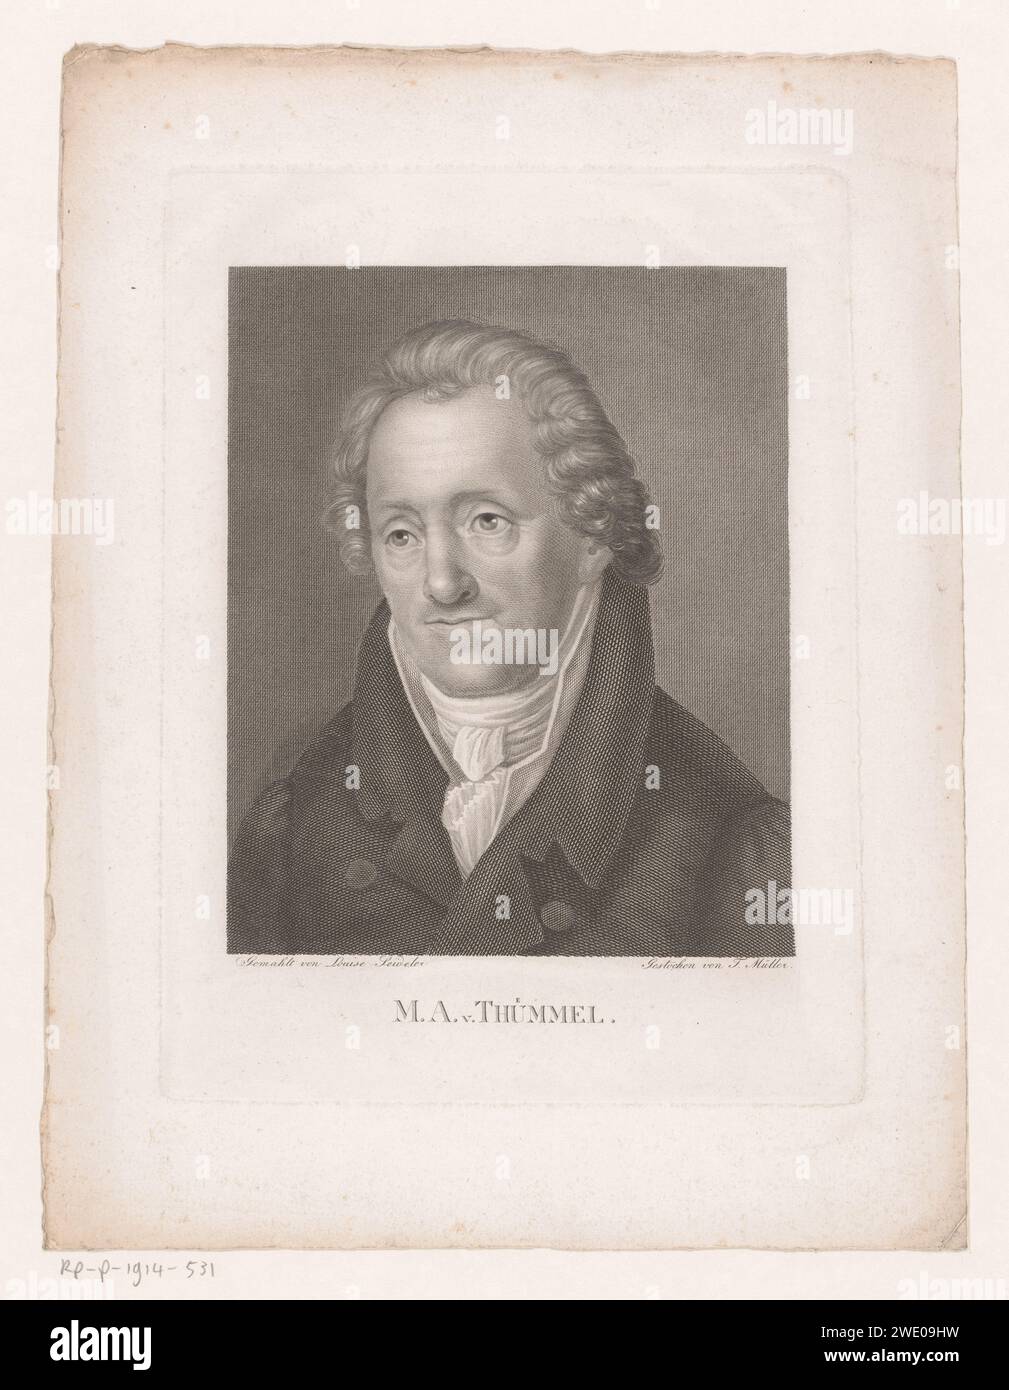 PortraT van Moritz August von Thümmel, Johann Friedrich Wilhelm Müller, después de Louise Caroline Sophie Seidler, 1792 - 1816 papel de impresión grabado de personas históricas Foto de stock